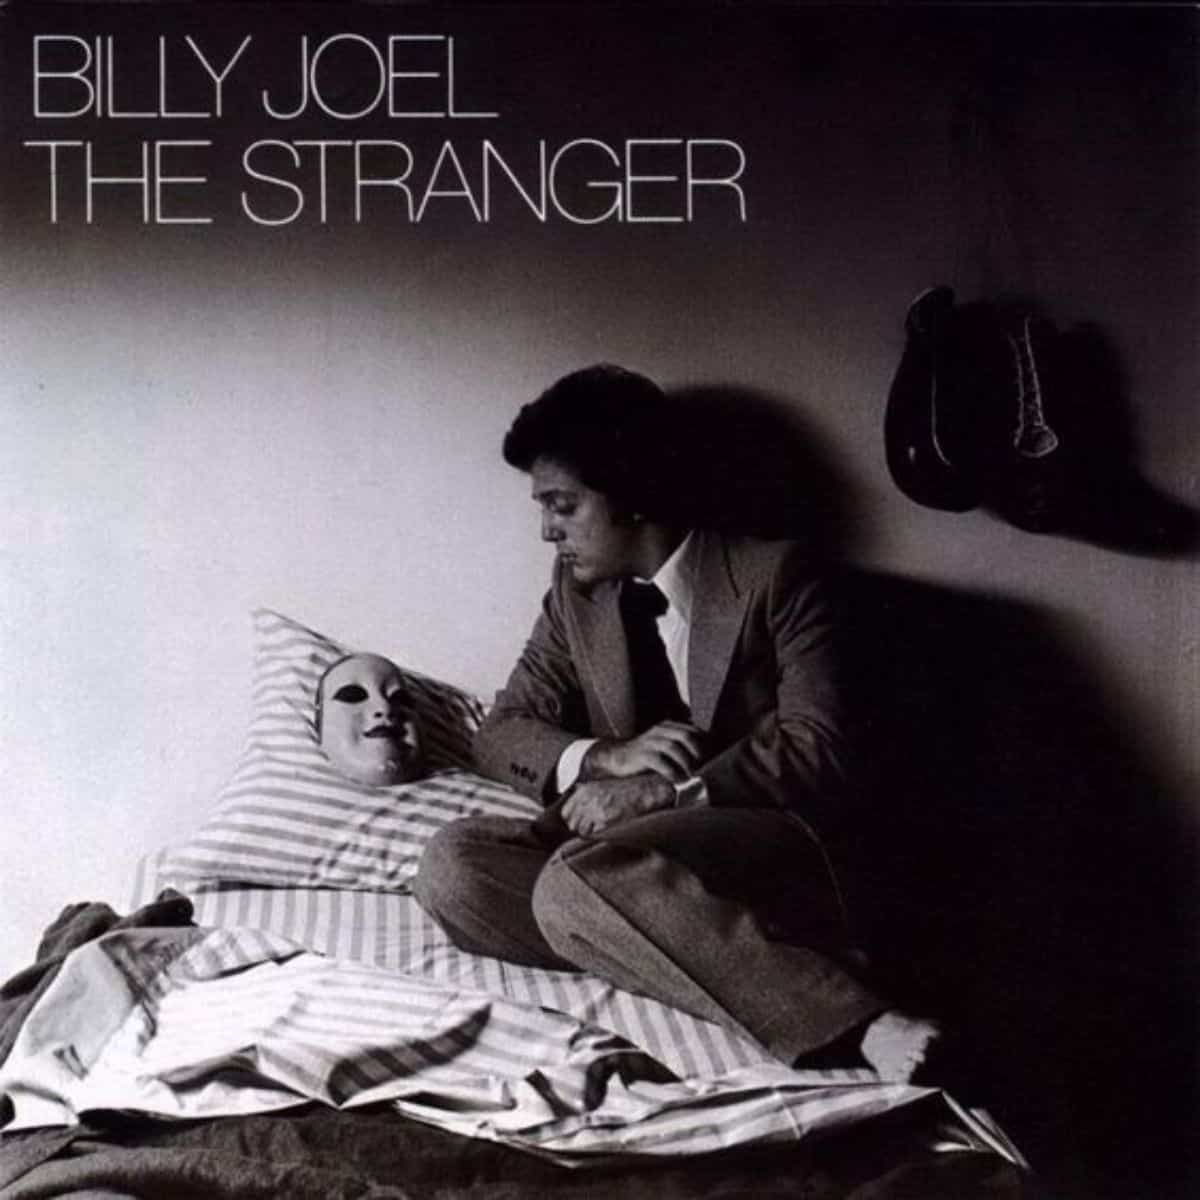 billy joel's album cover